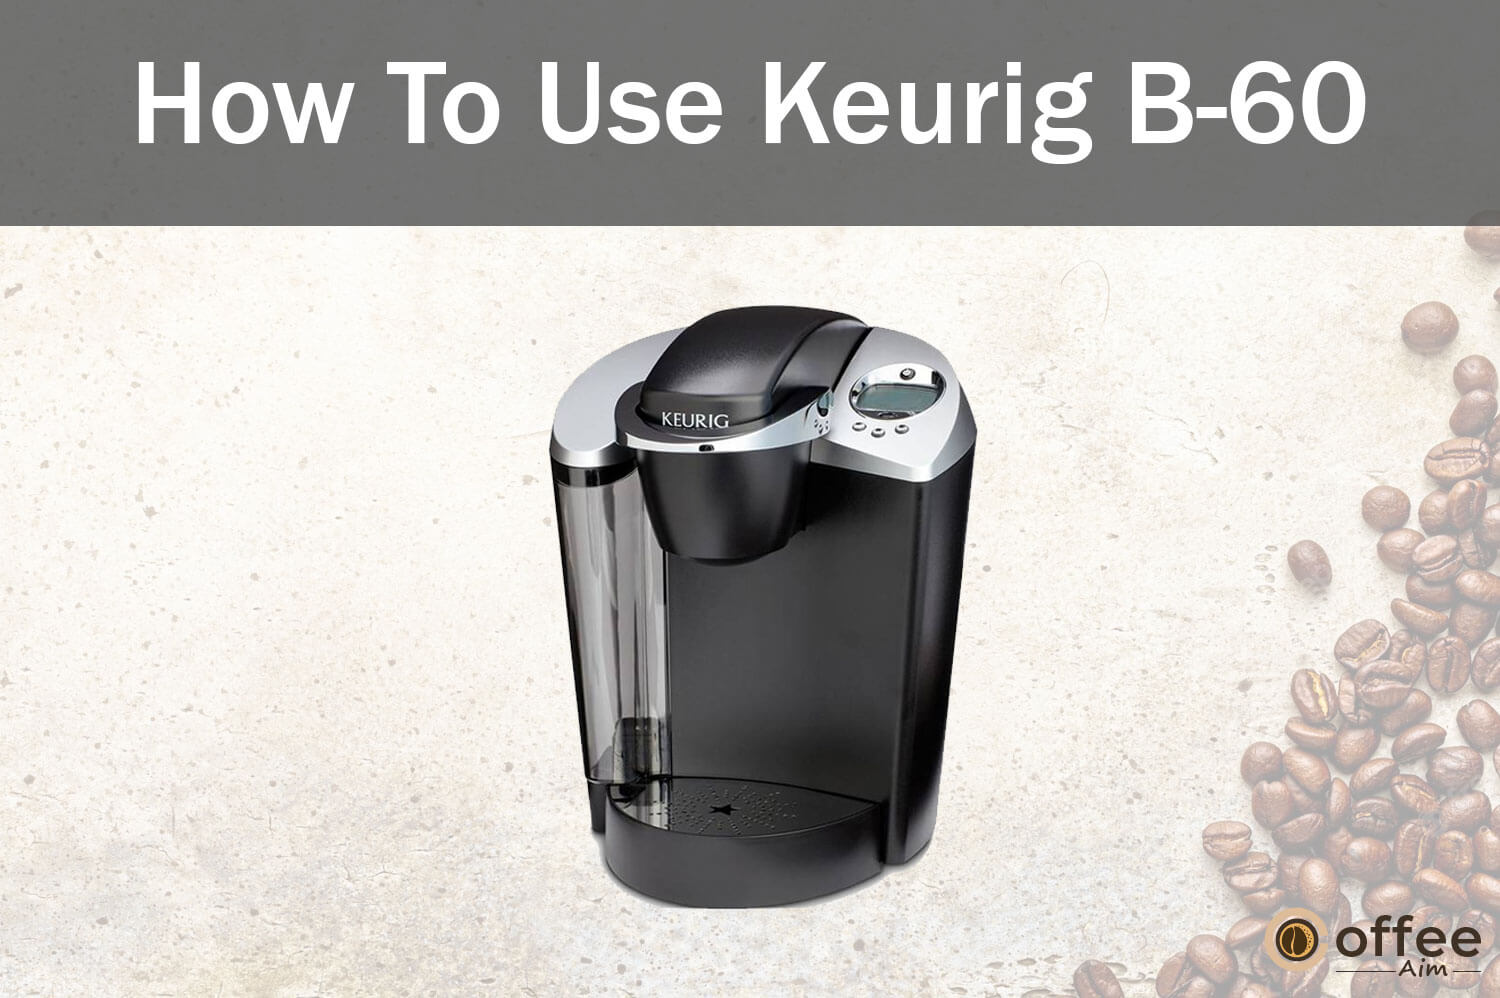 How To Use Keurig B-60